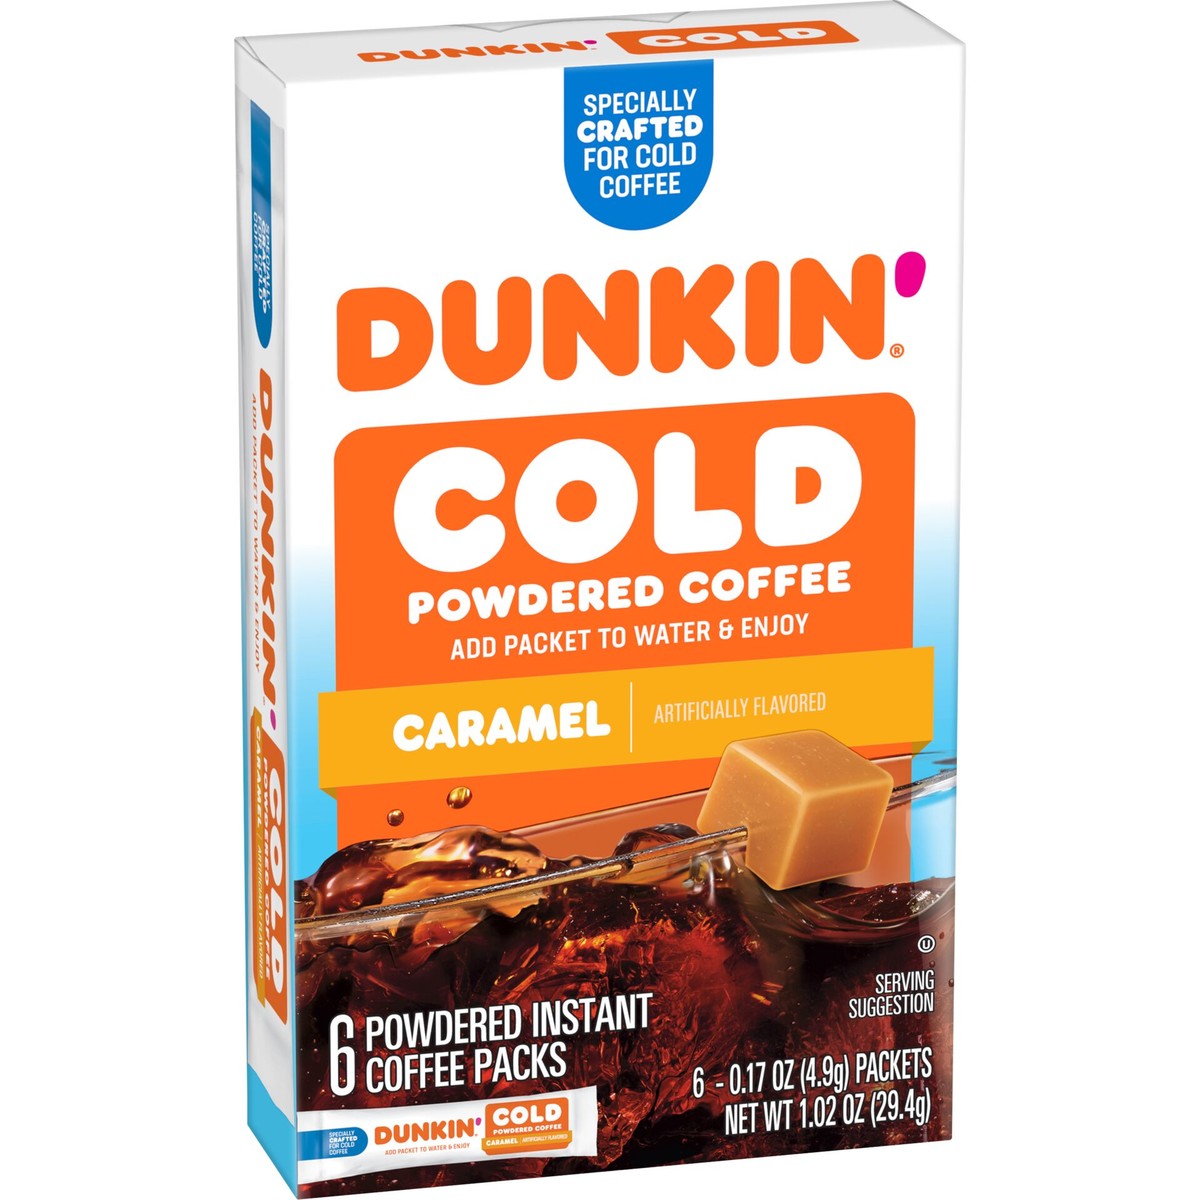 Caramel Flavored, Powdered Coffee Packs